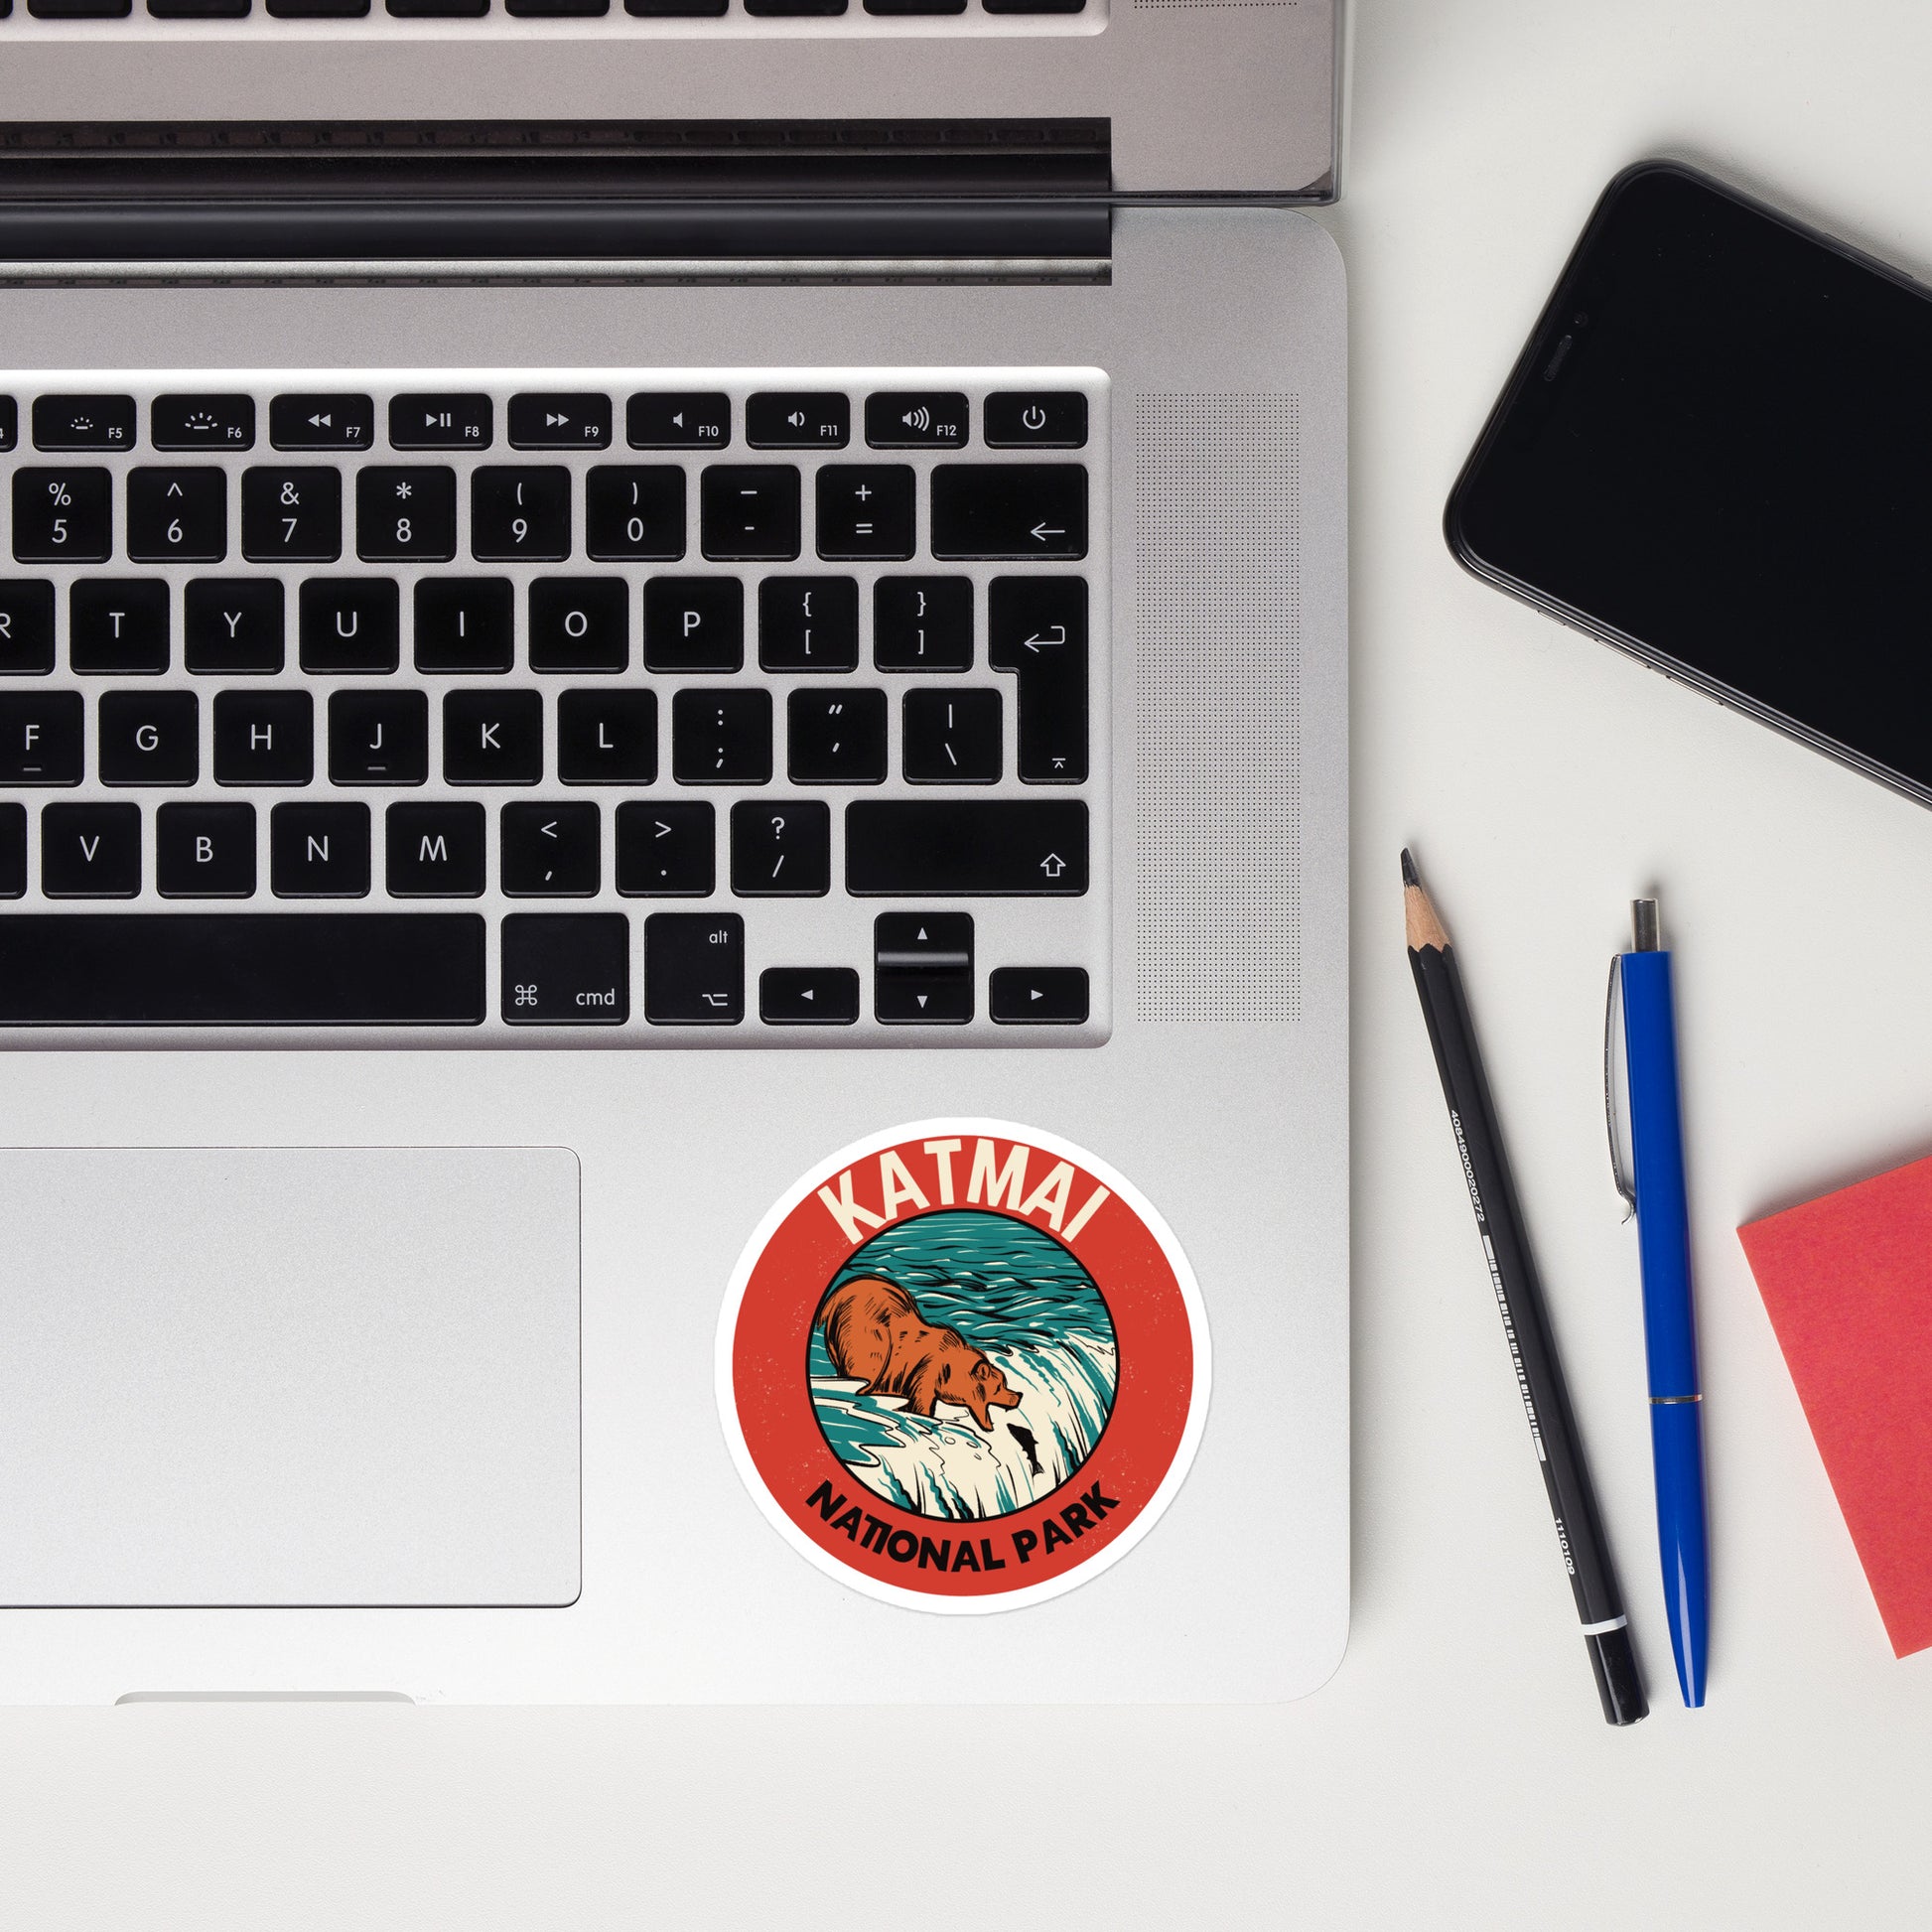 A sticker of Katmai National Park on a laptop